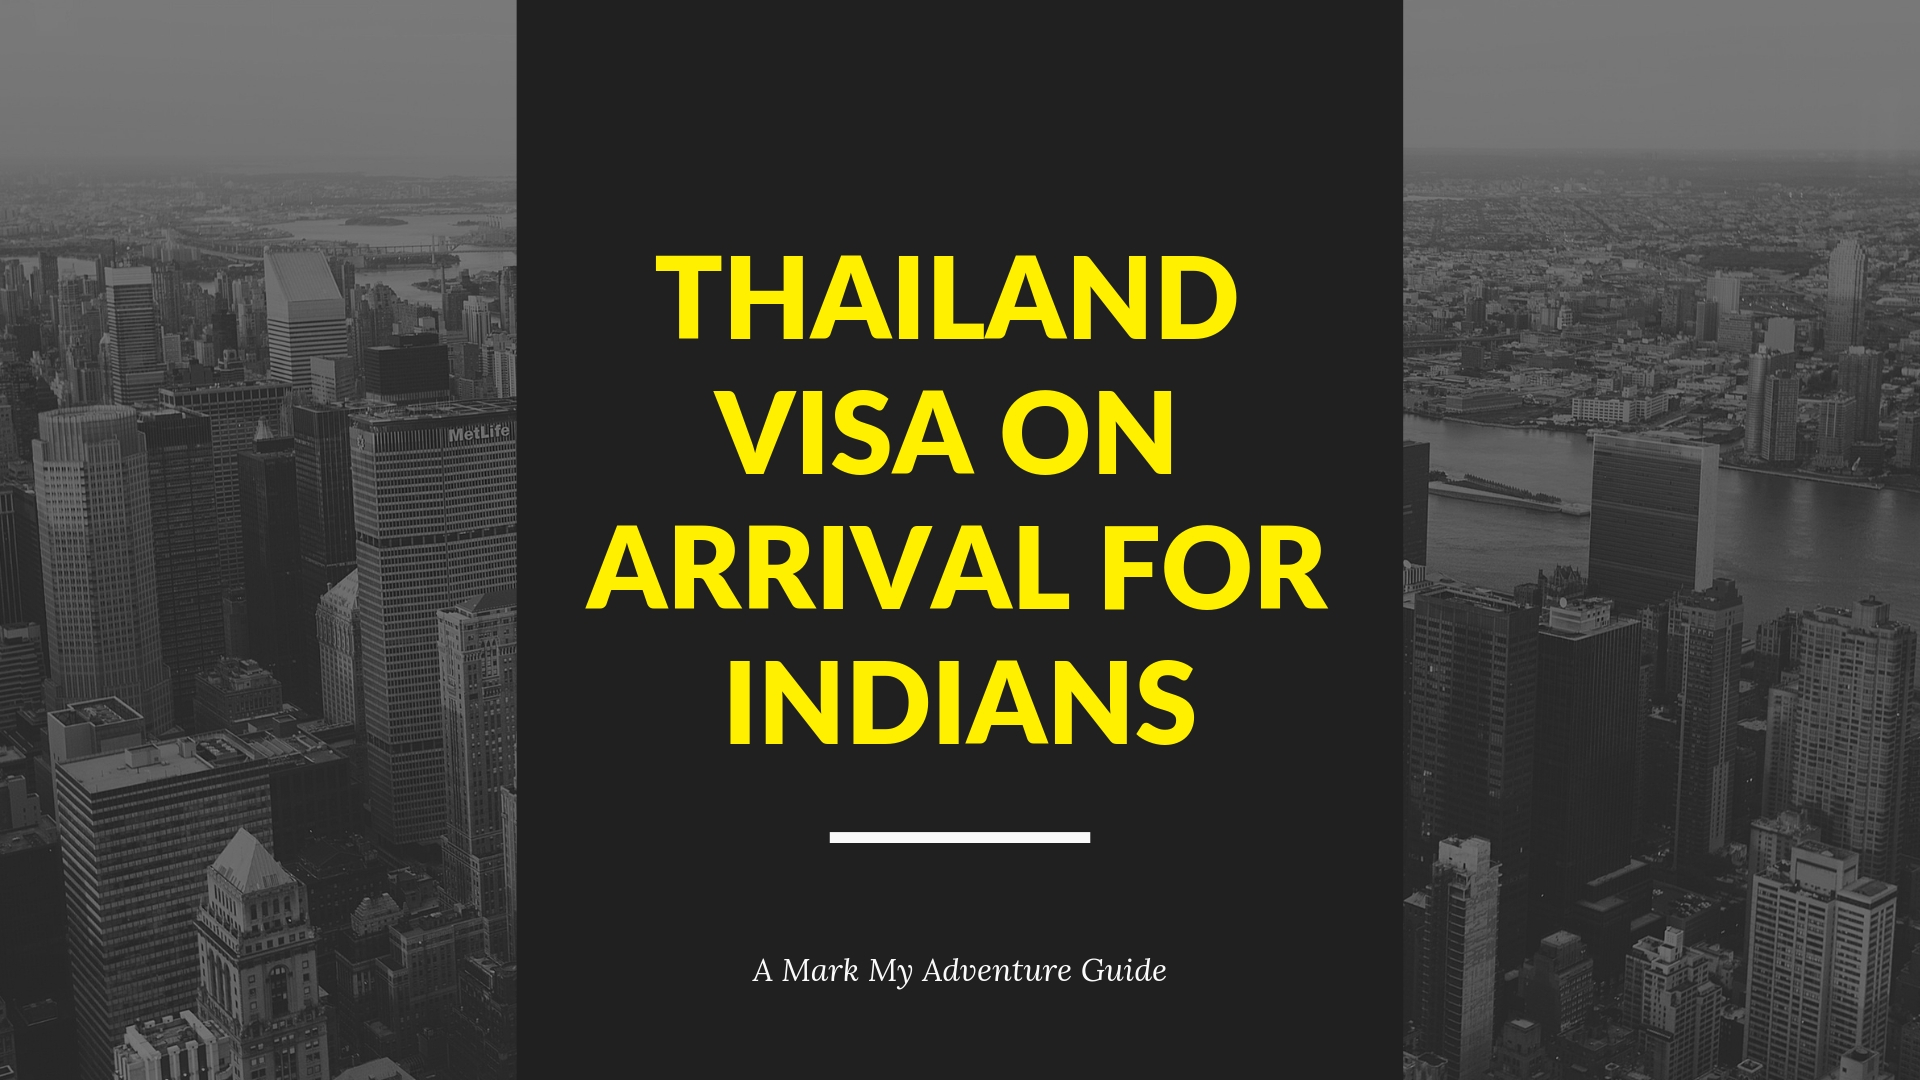 Thailand Visa on Arrival Mark My Adventure